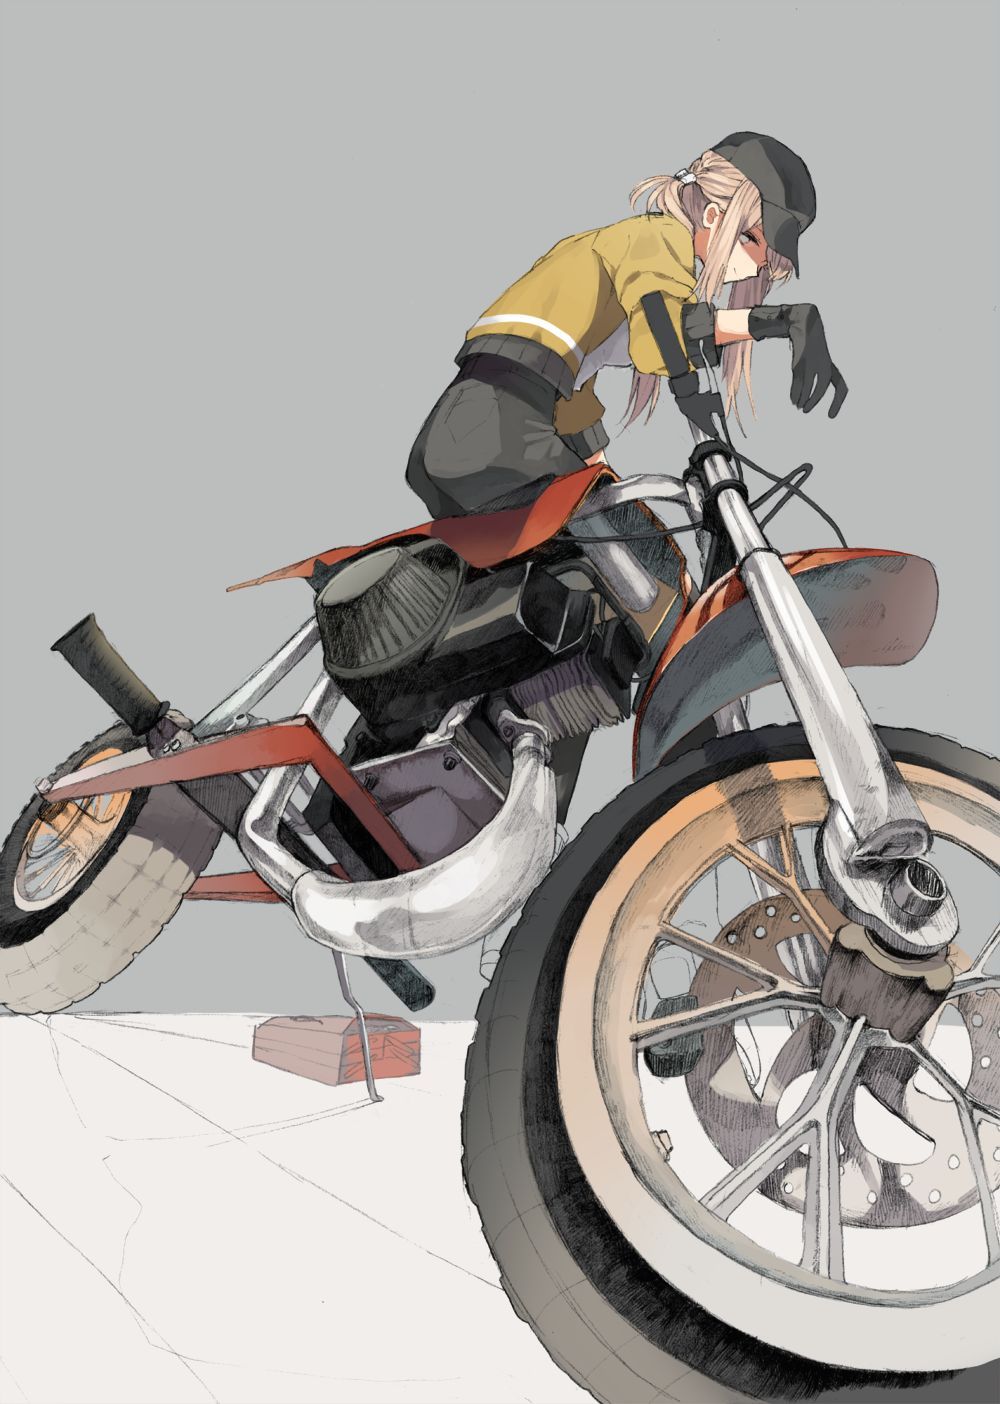 [Secondary] 可愛kattari, sometimes to cool girls riding bikes pictures 2